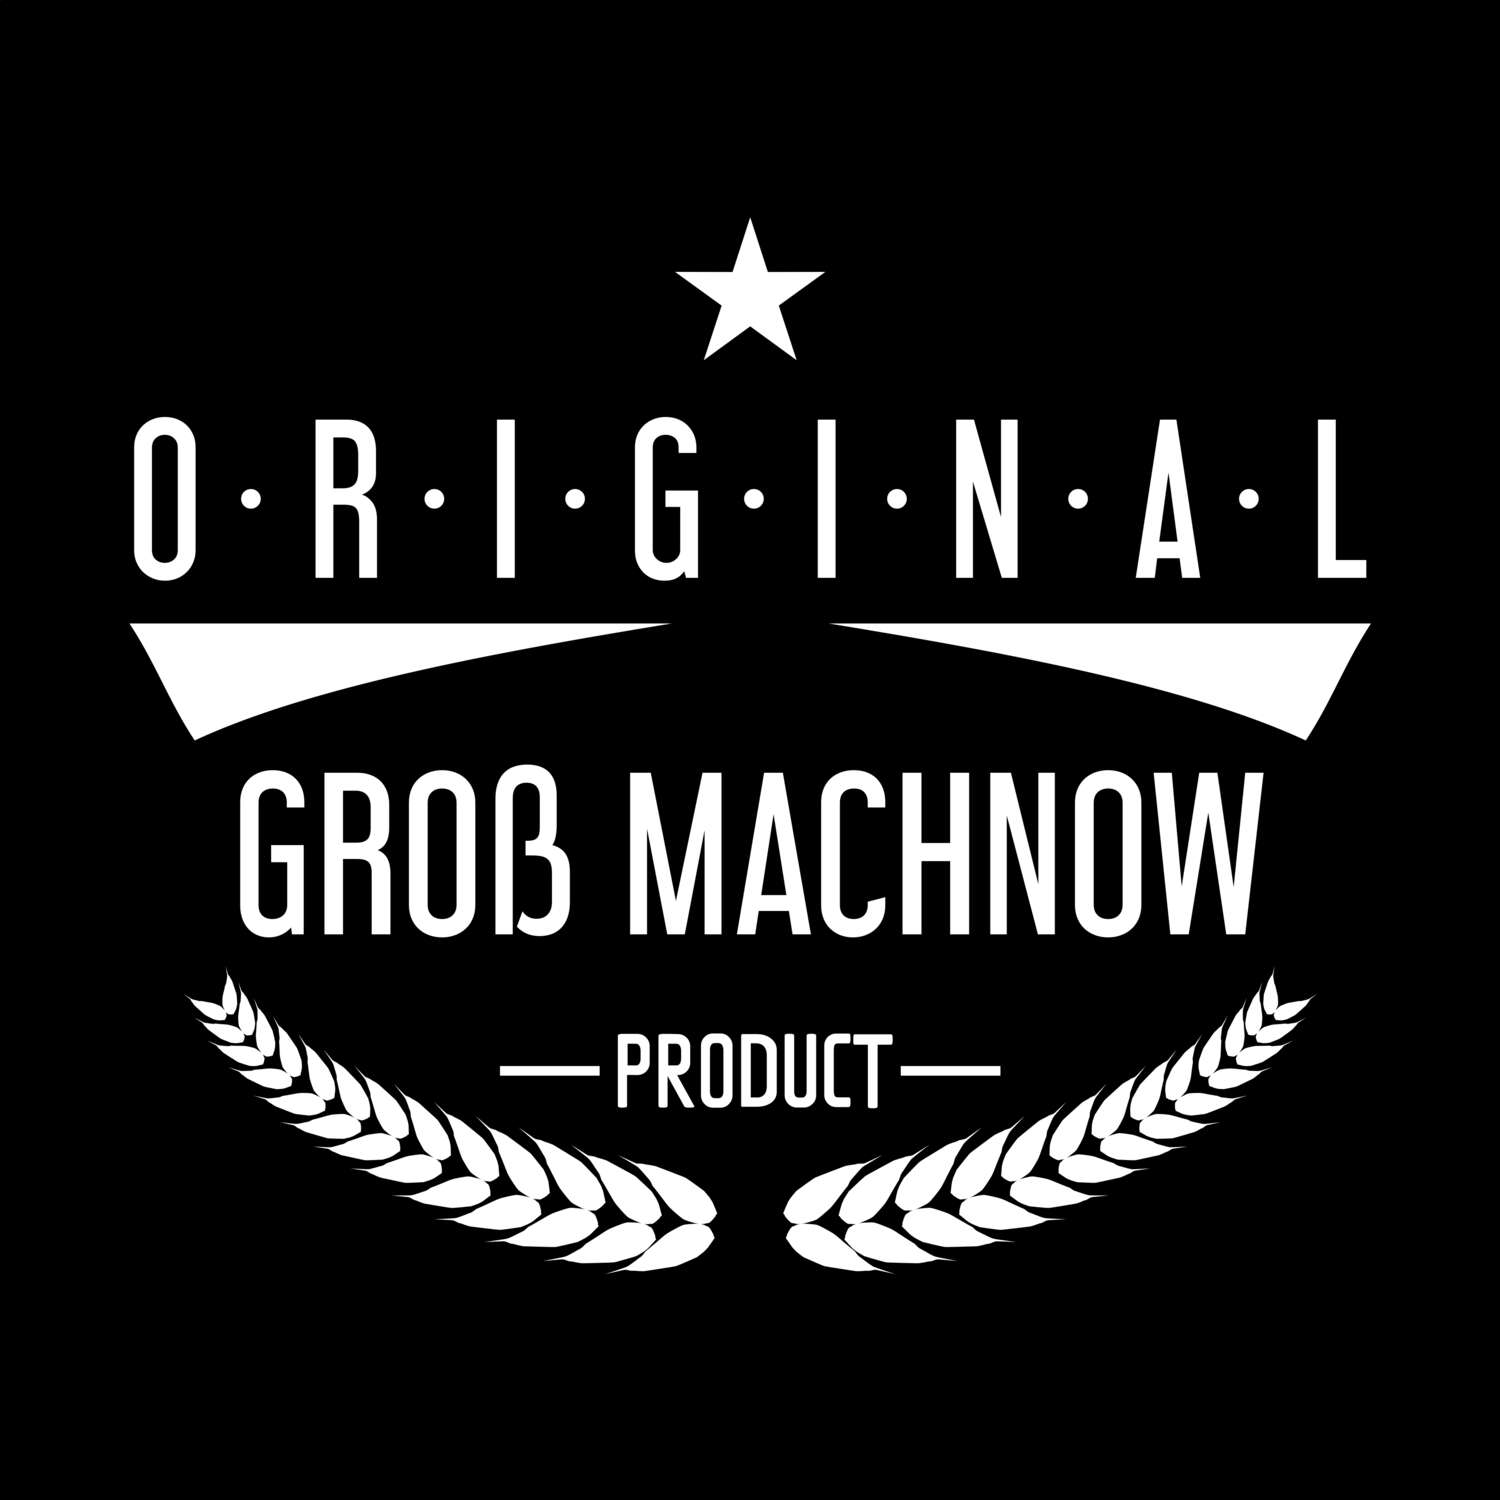 Groß Machnow T-Shirt »Original Product«